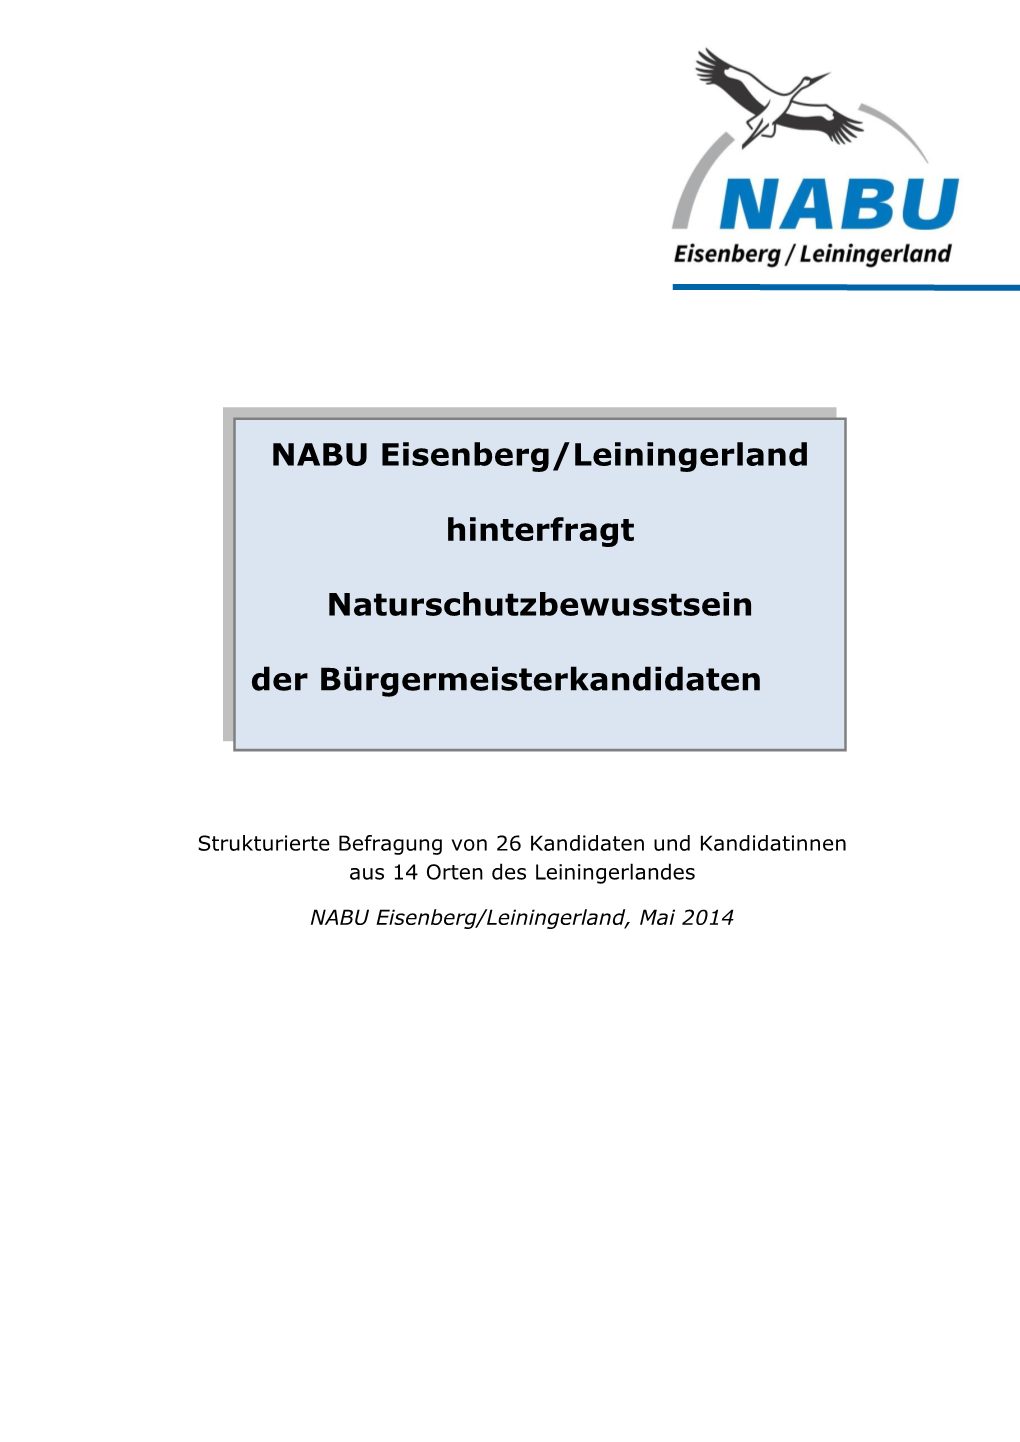 NABU Eisenberg/Leiningerland Hinterfragt Naturschutzbewusstsein